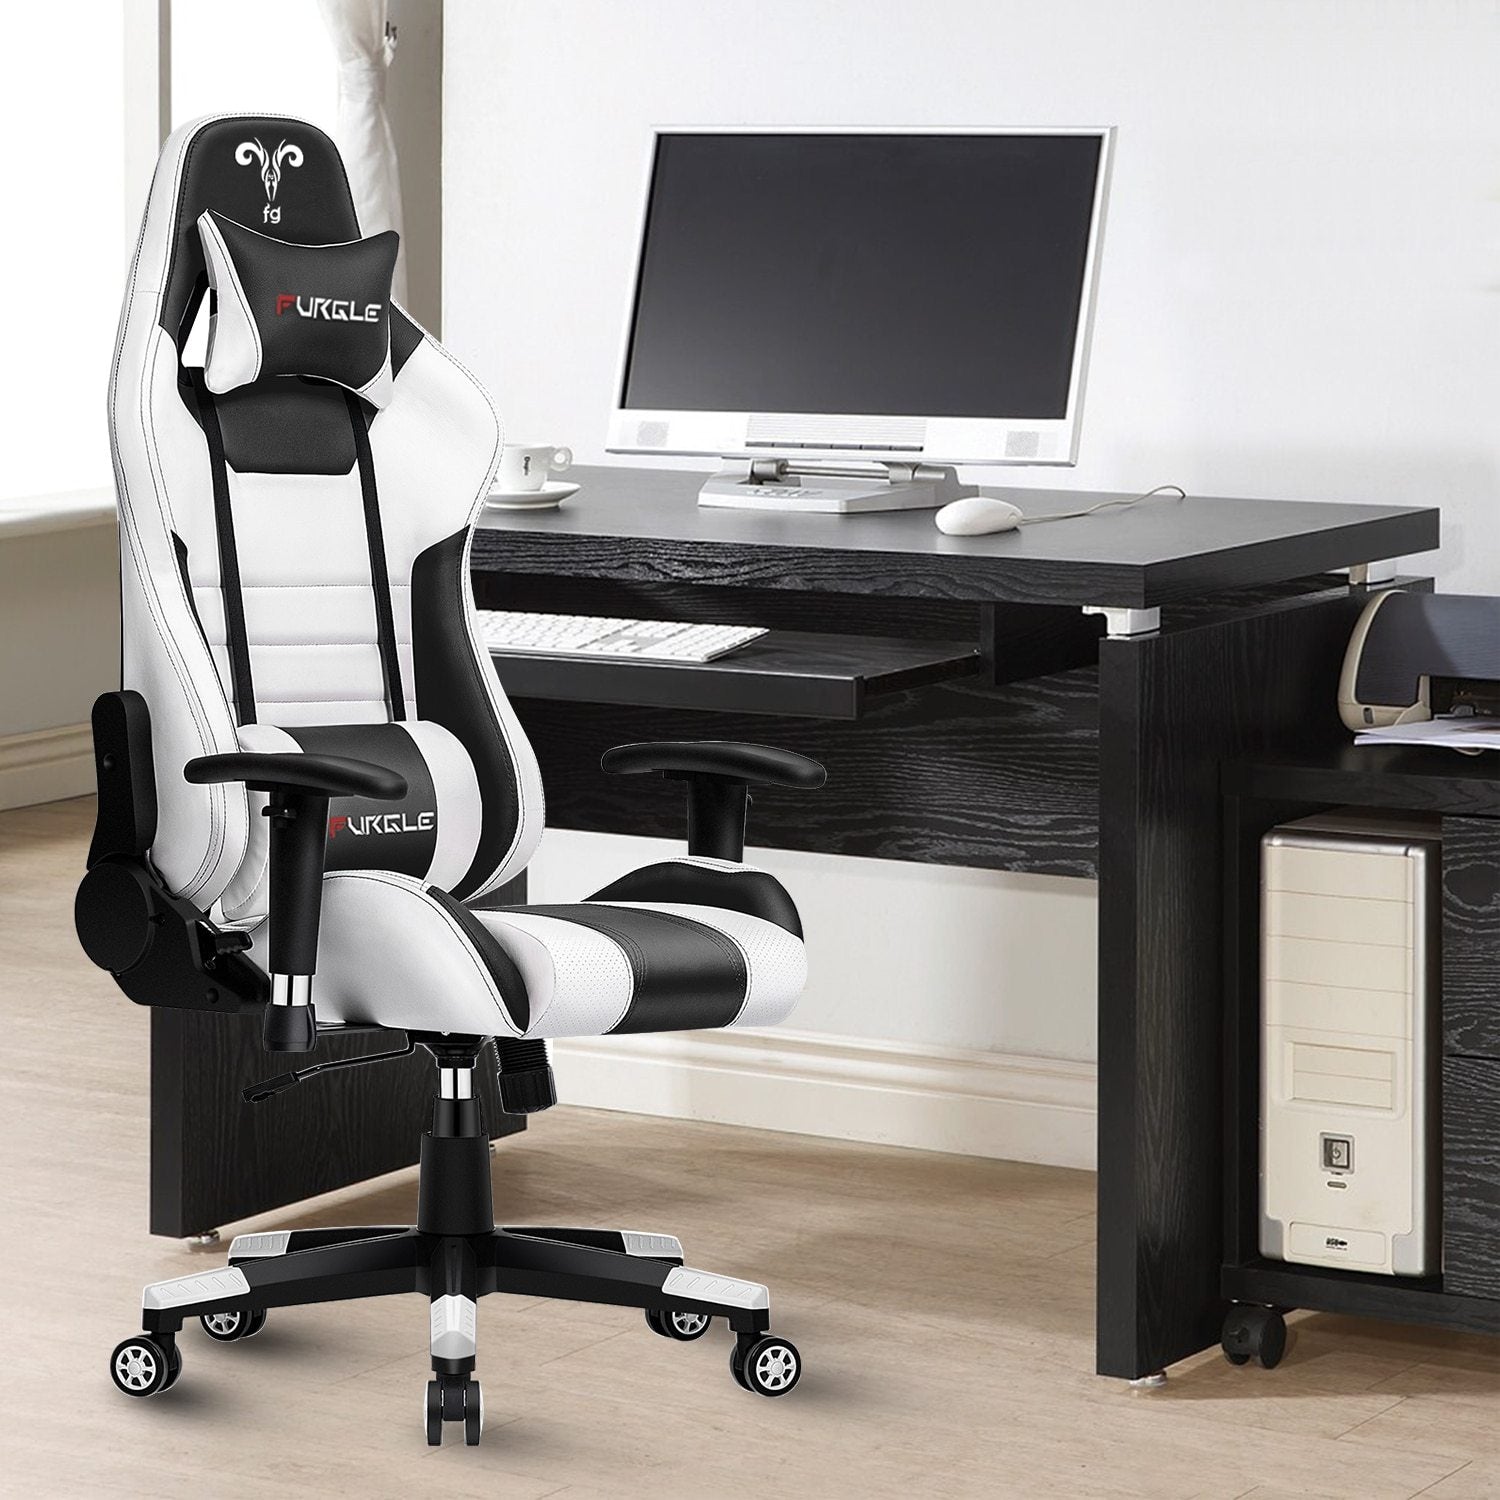 Furgle Pro Ergonomic Gaming Chair